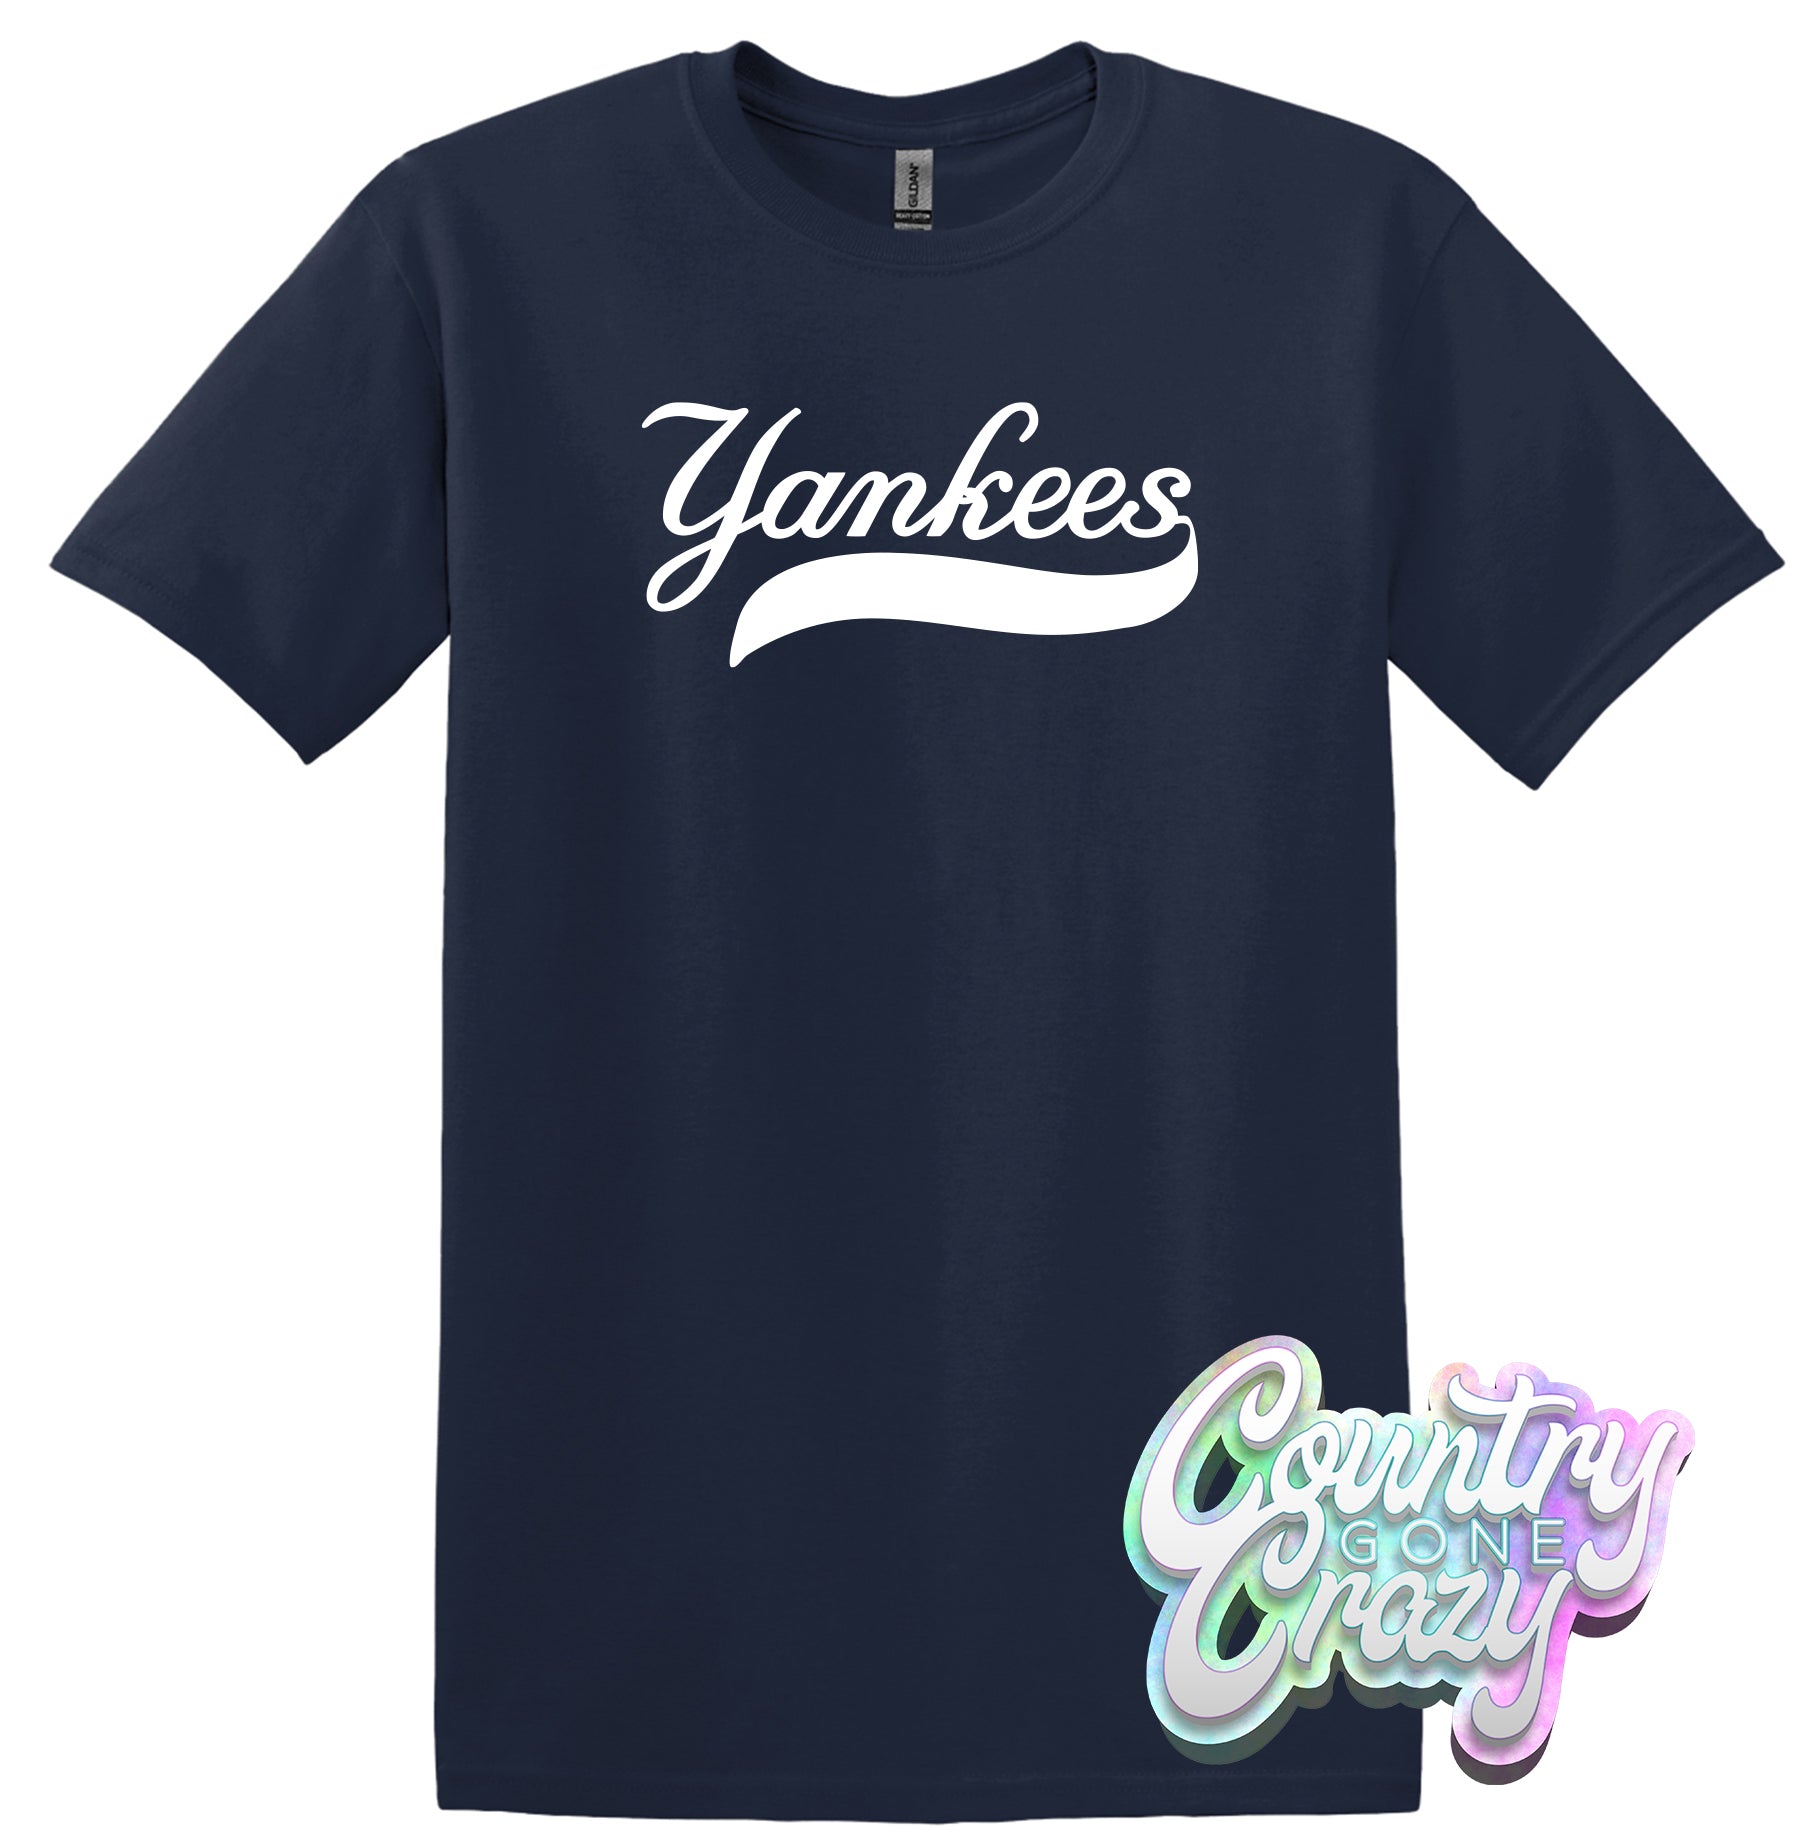 new york yankees apparel near me